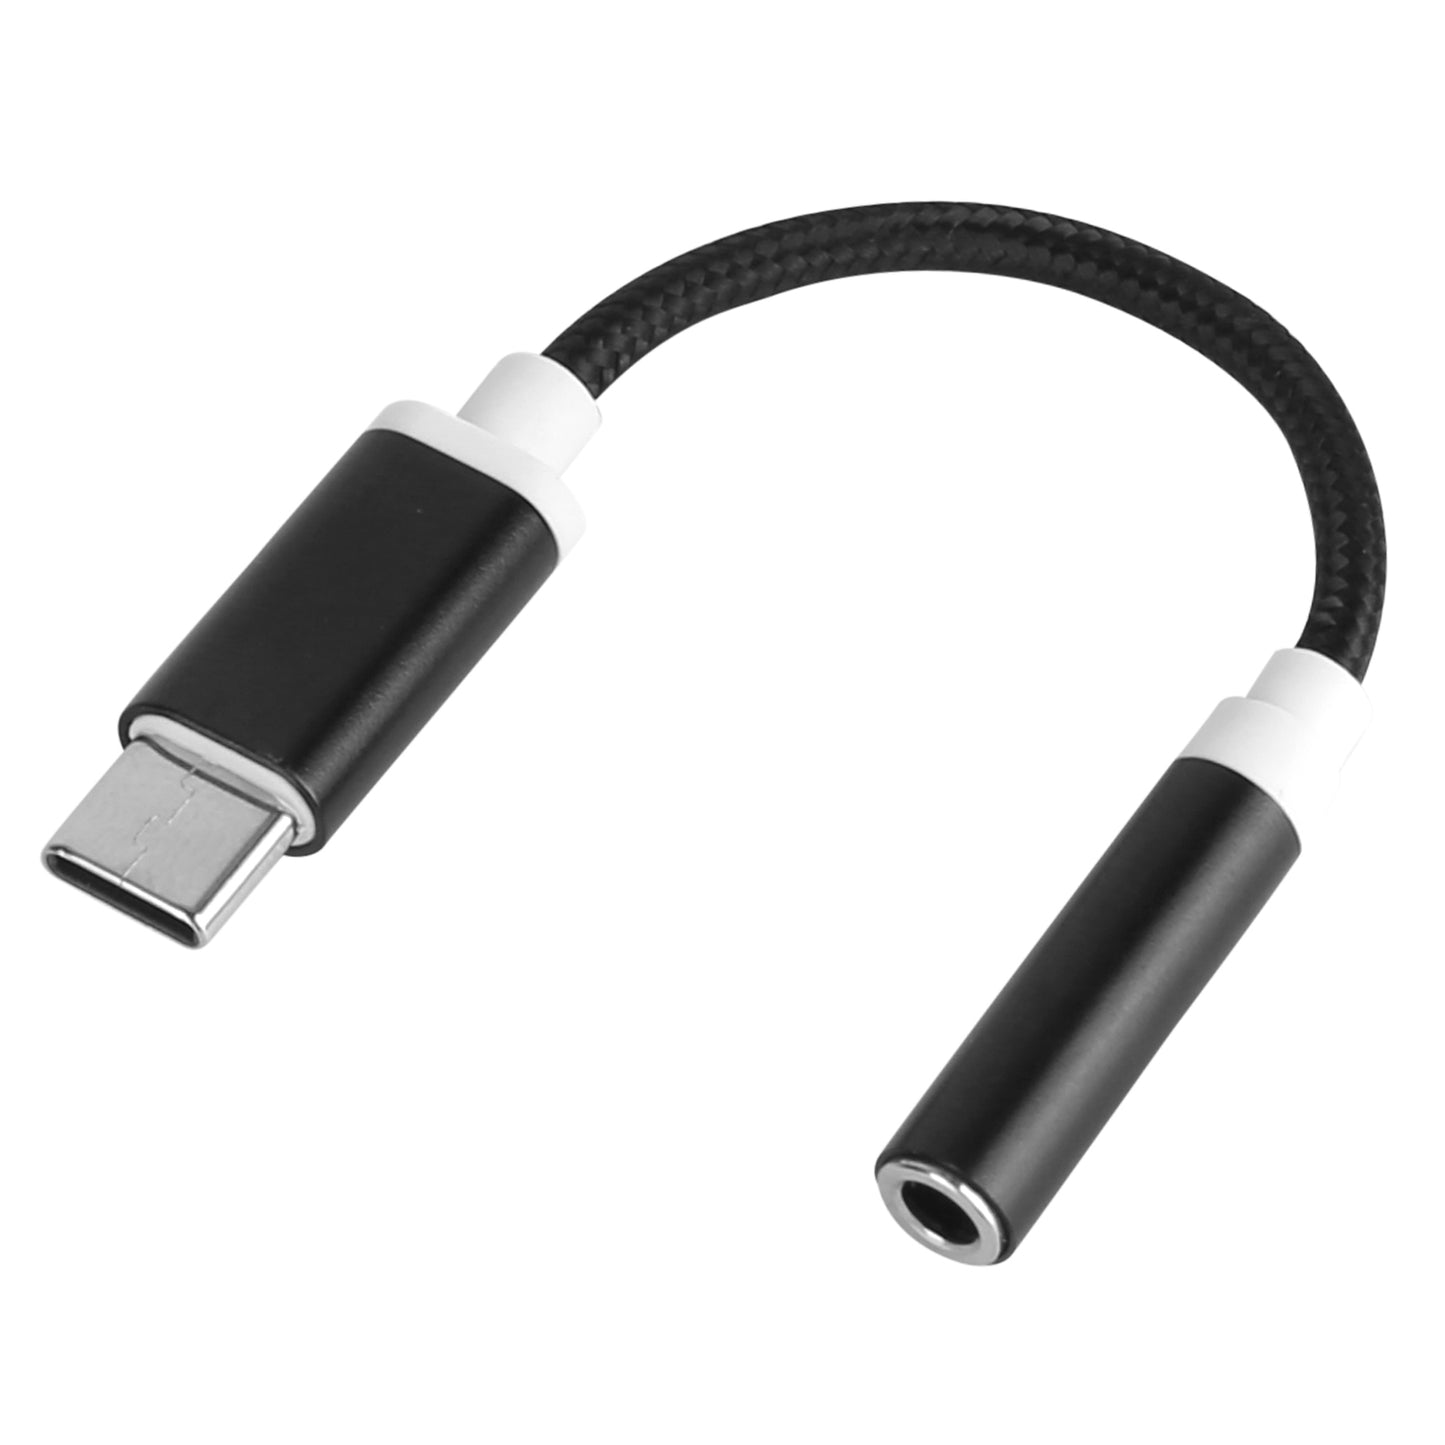 USB-C Type C Adapter Port to 3.5mm Aux Audio Jack Earphone Headphone Cable Cord - Black -